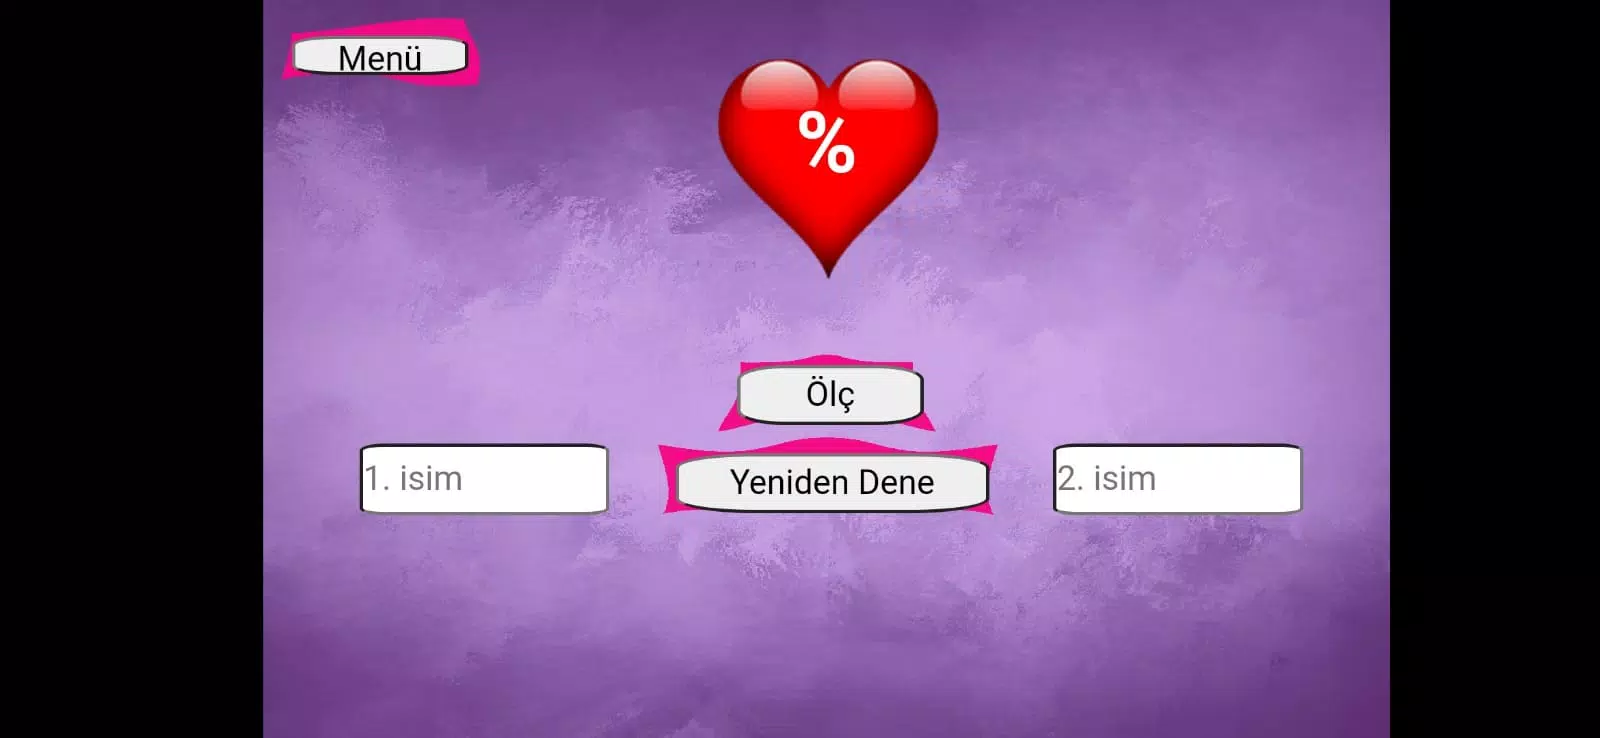 İsimli Aşk Testi - Aşk Ölçer APK for Android Download